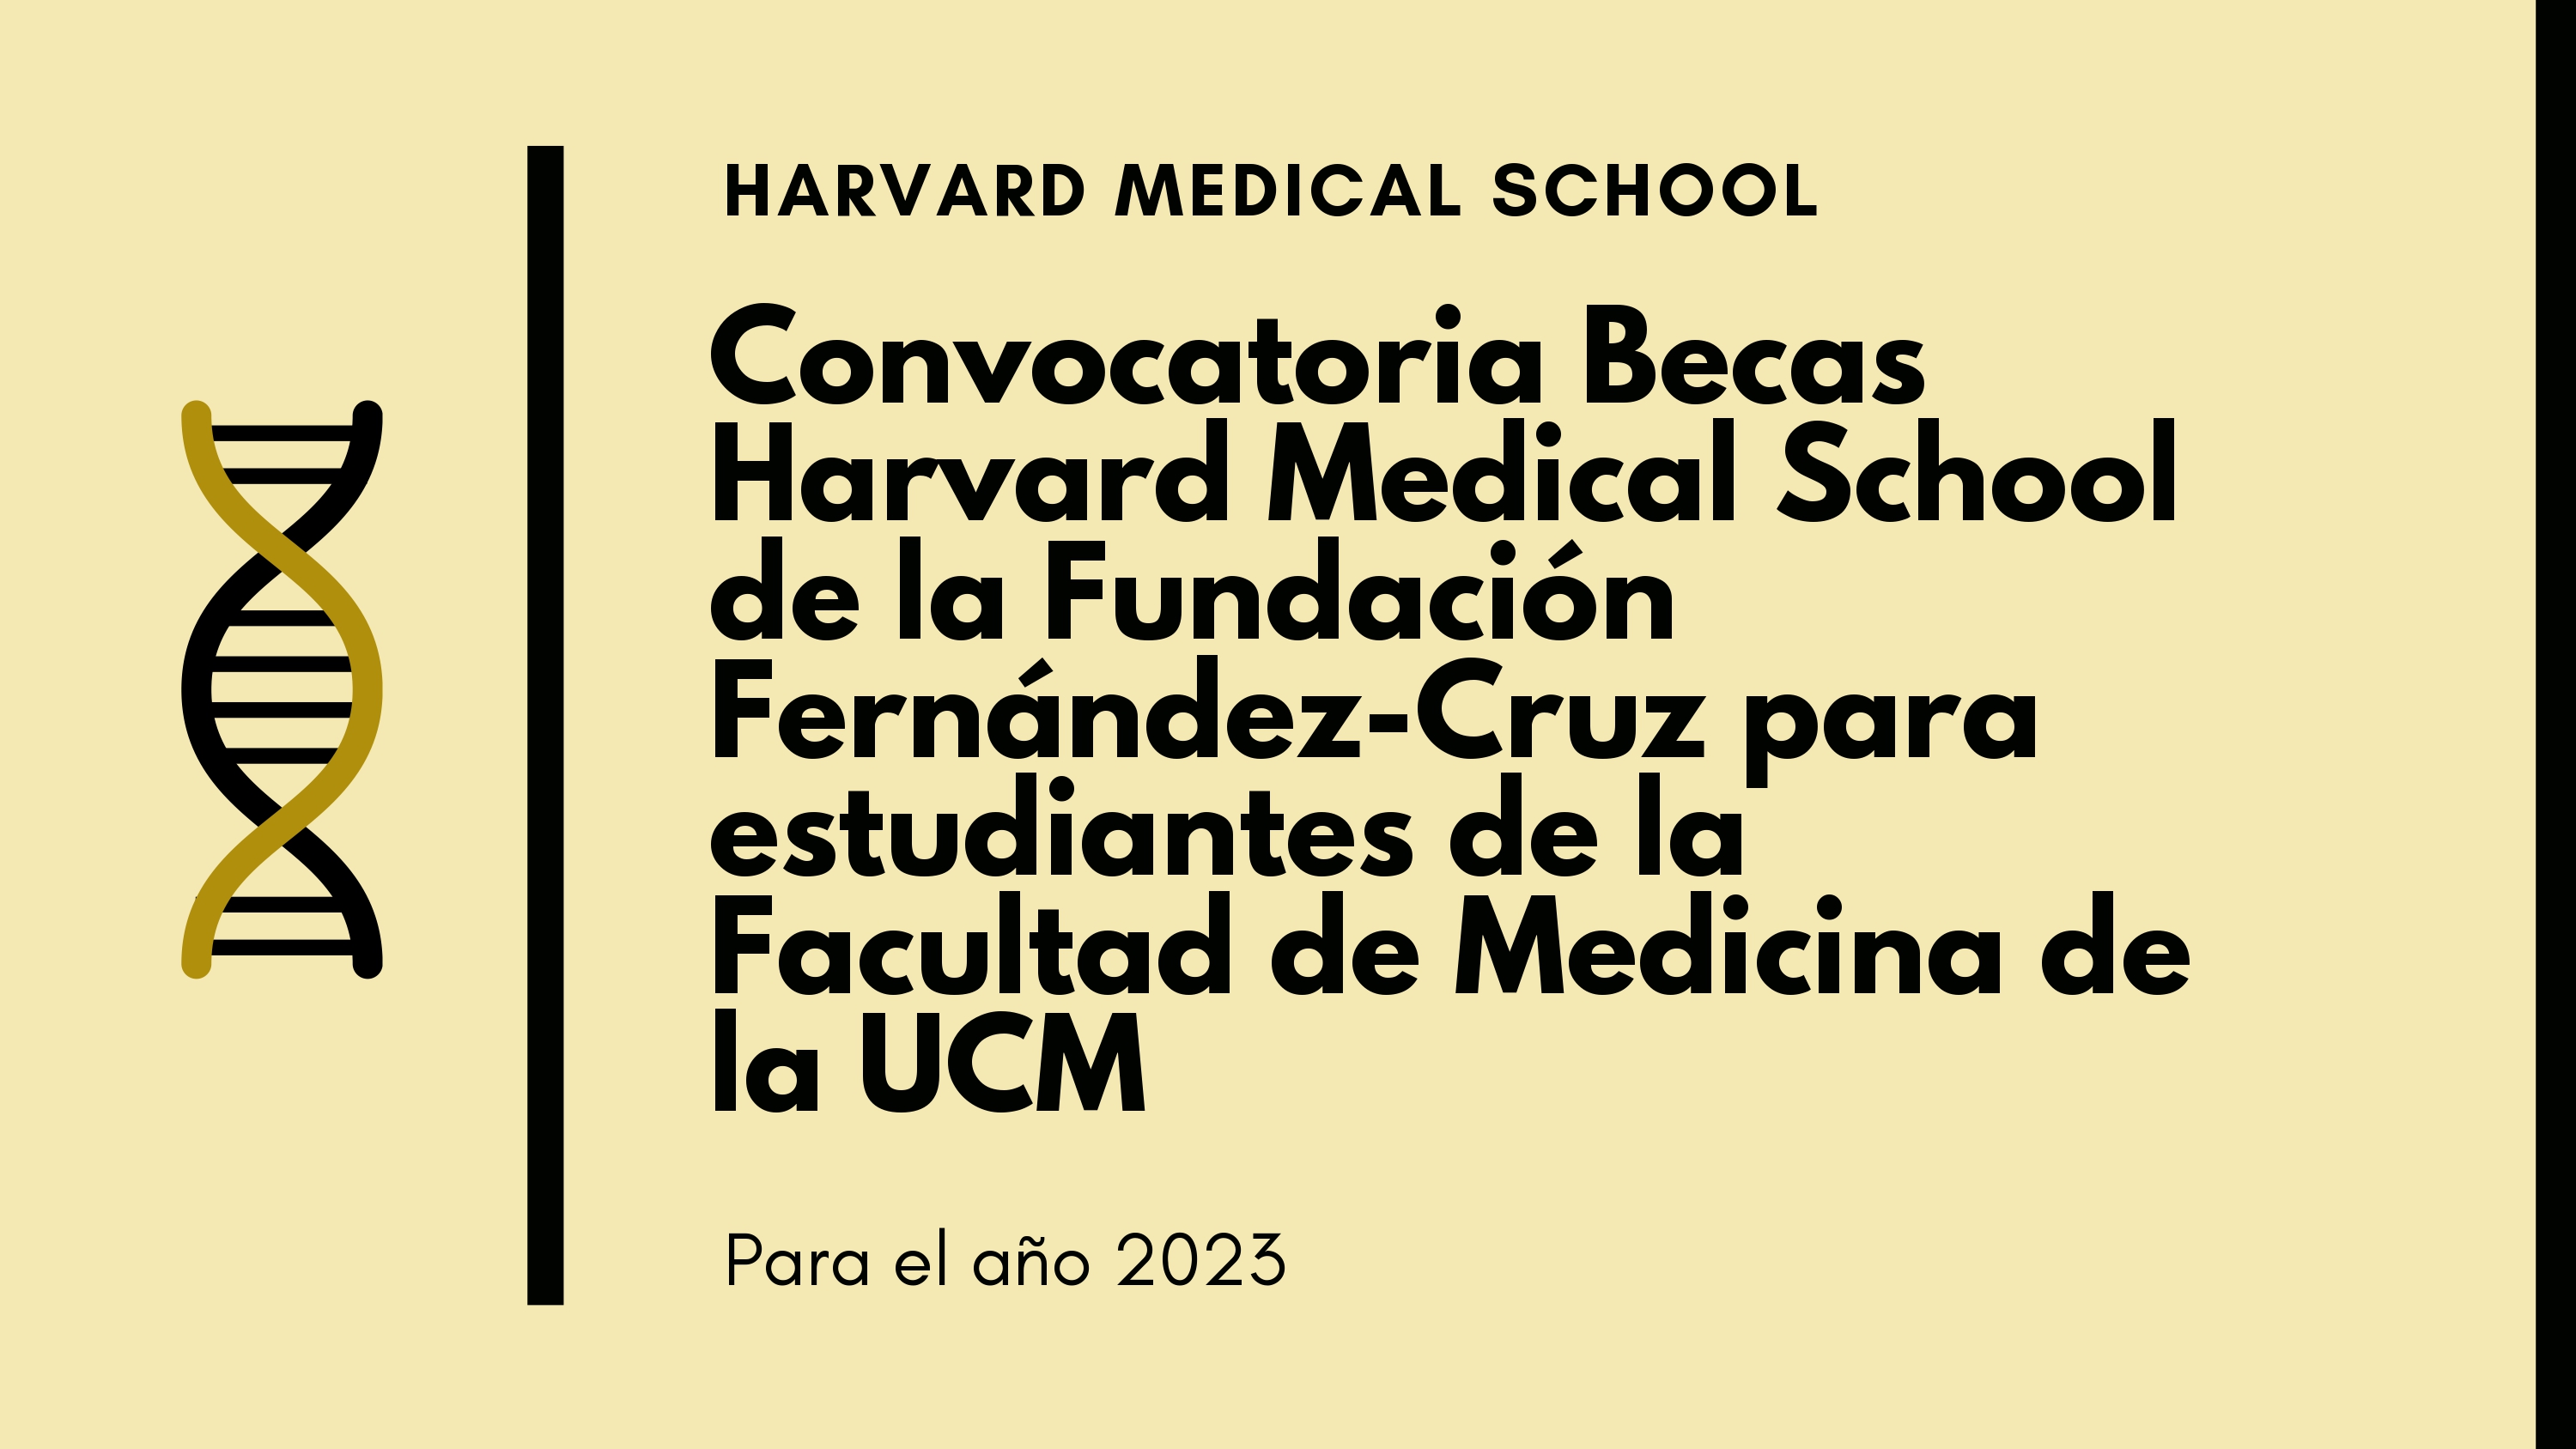 CONVOCATORIA DE BECAS HARVARD MEDICAL SCHOOL